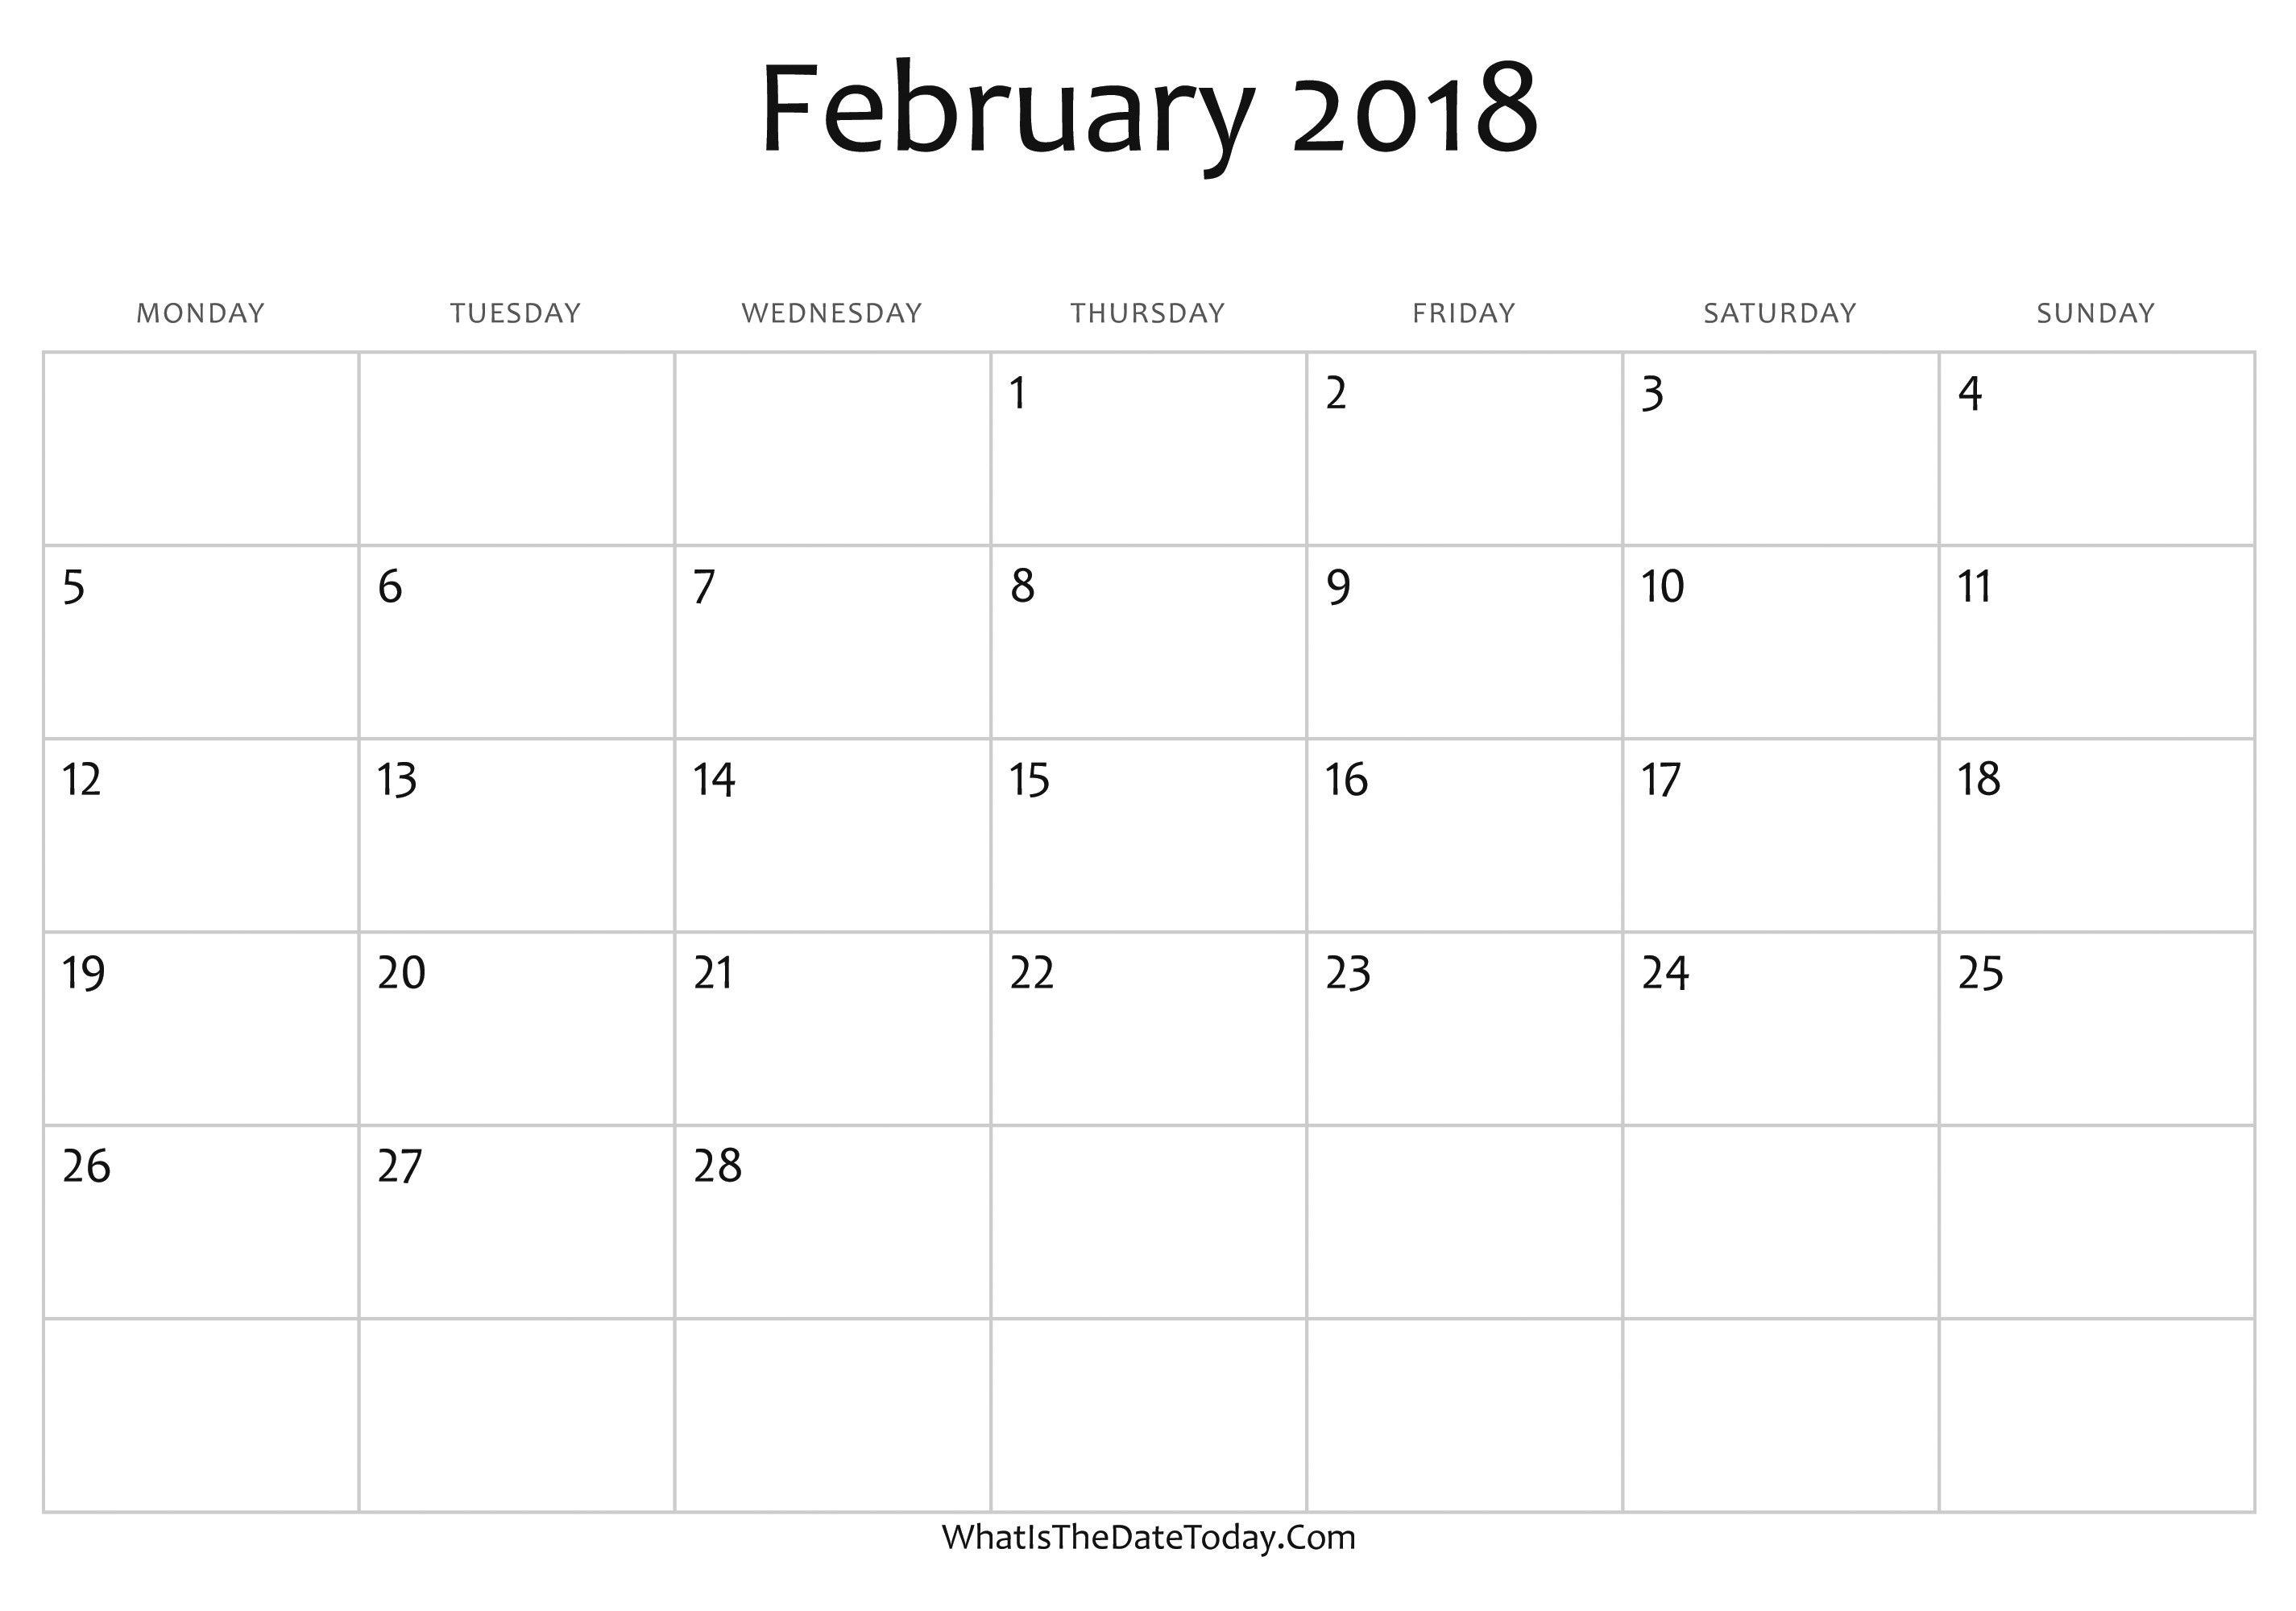 February 2018 Wallpaper Calendar